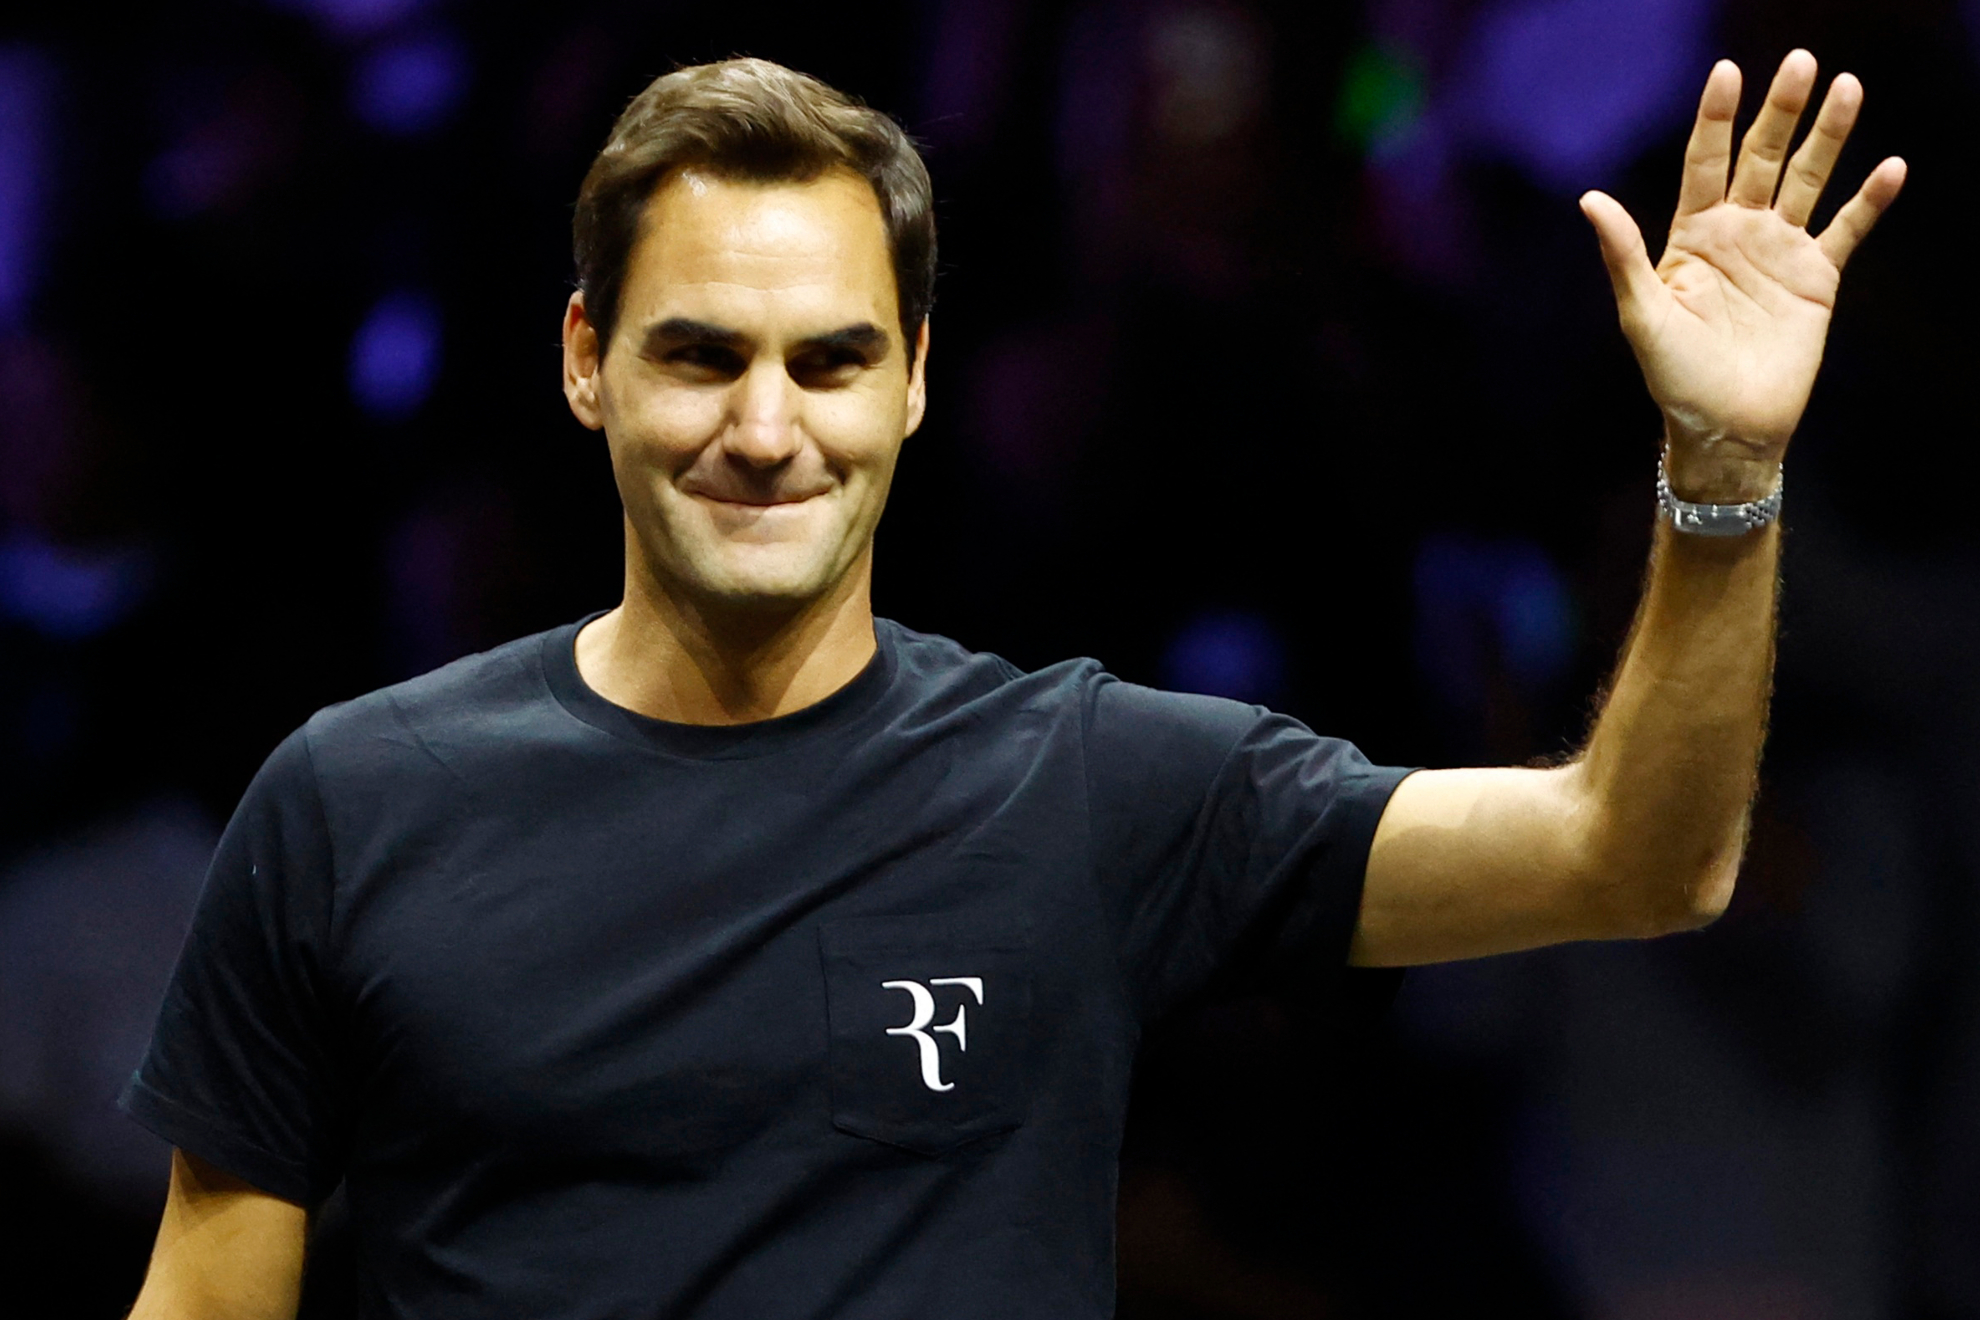 Después de una exitosa carrera que incluye 20 Grand Slam, Federer dirá adiós al tenis | Reuters